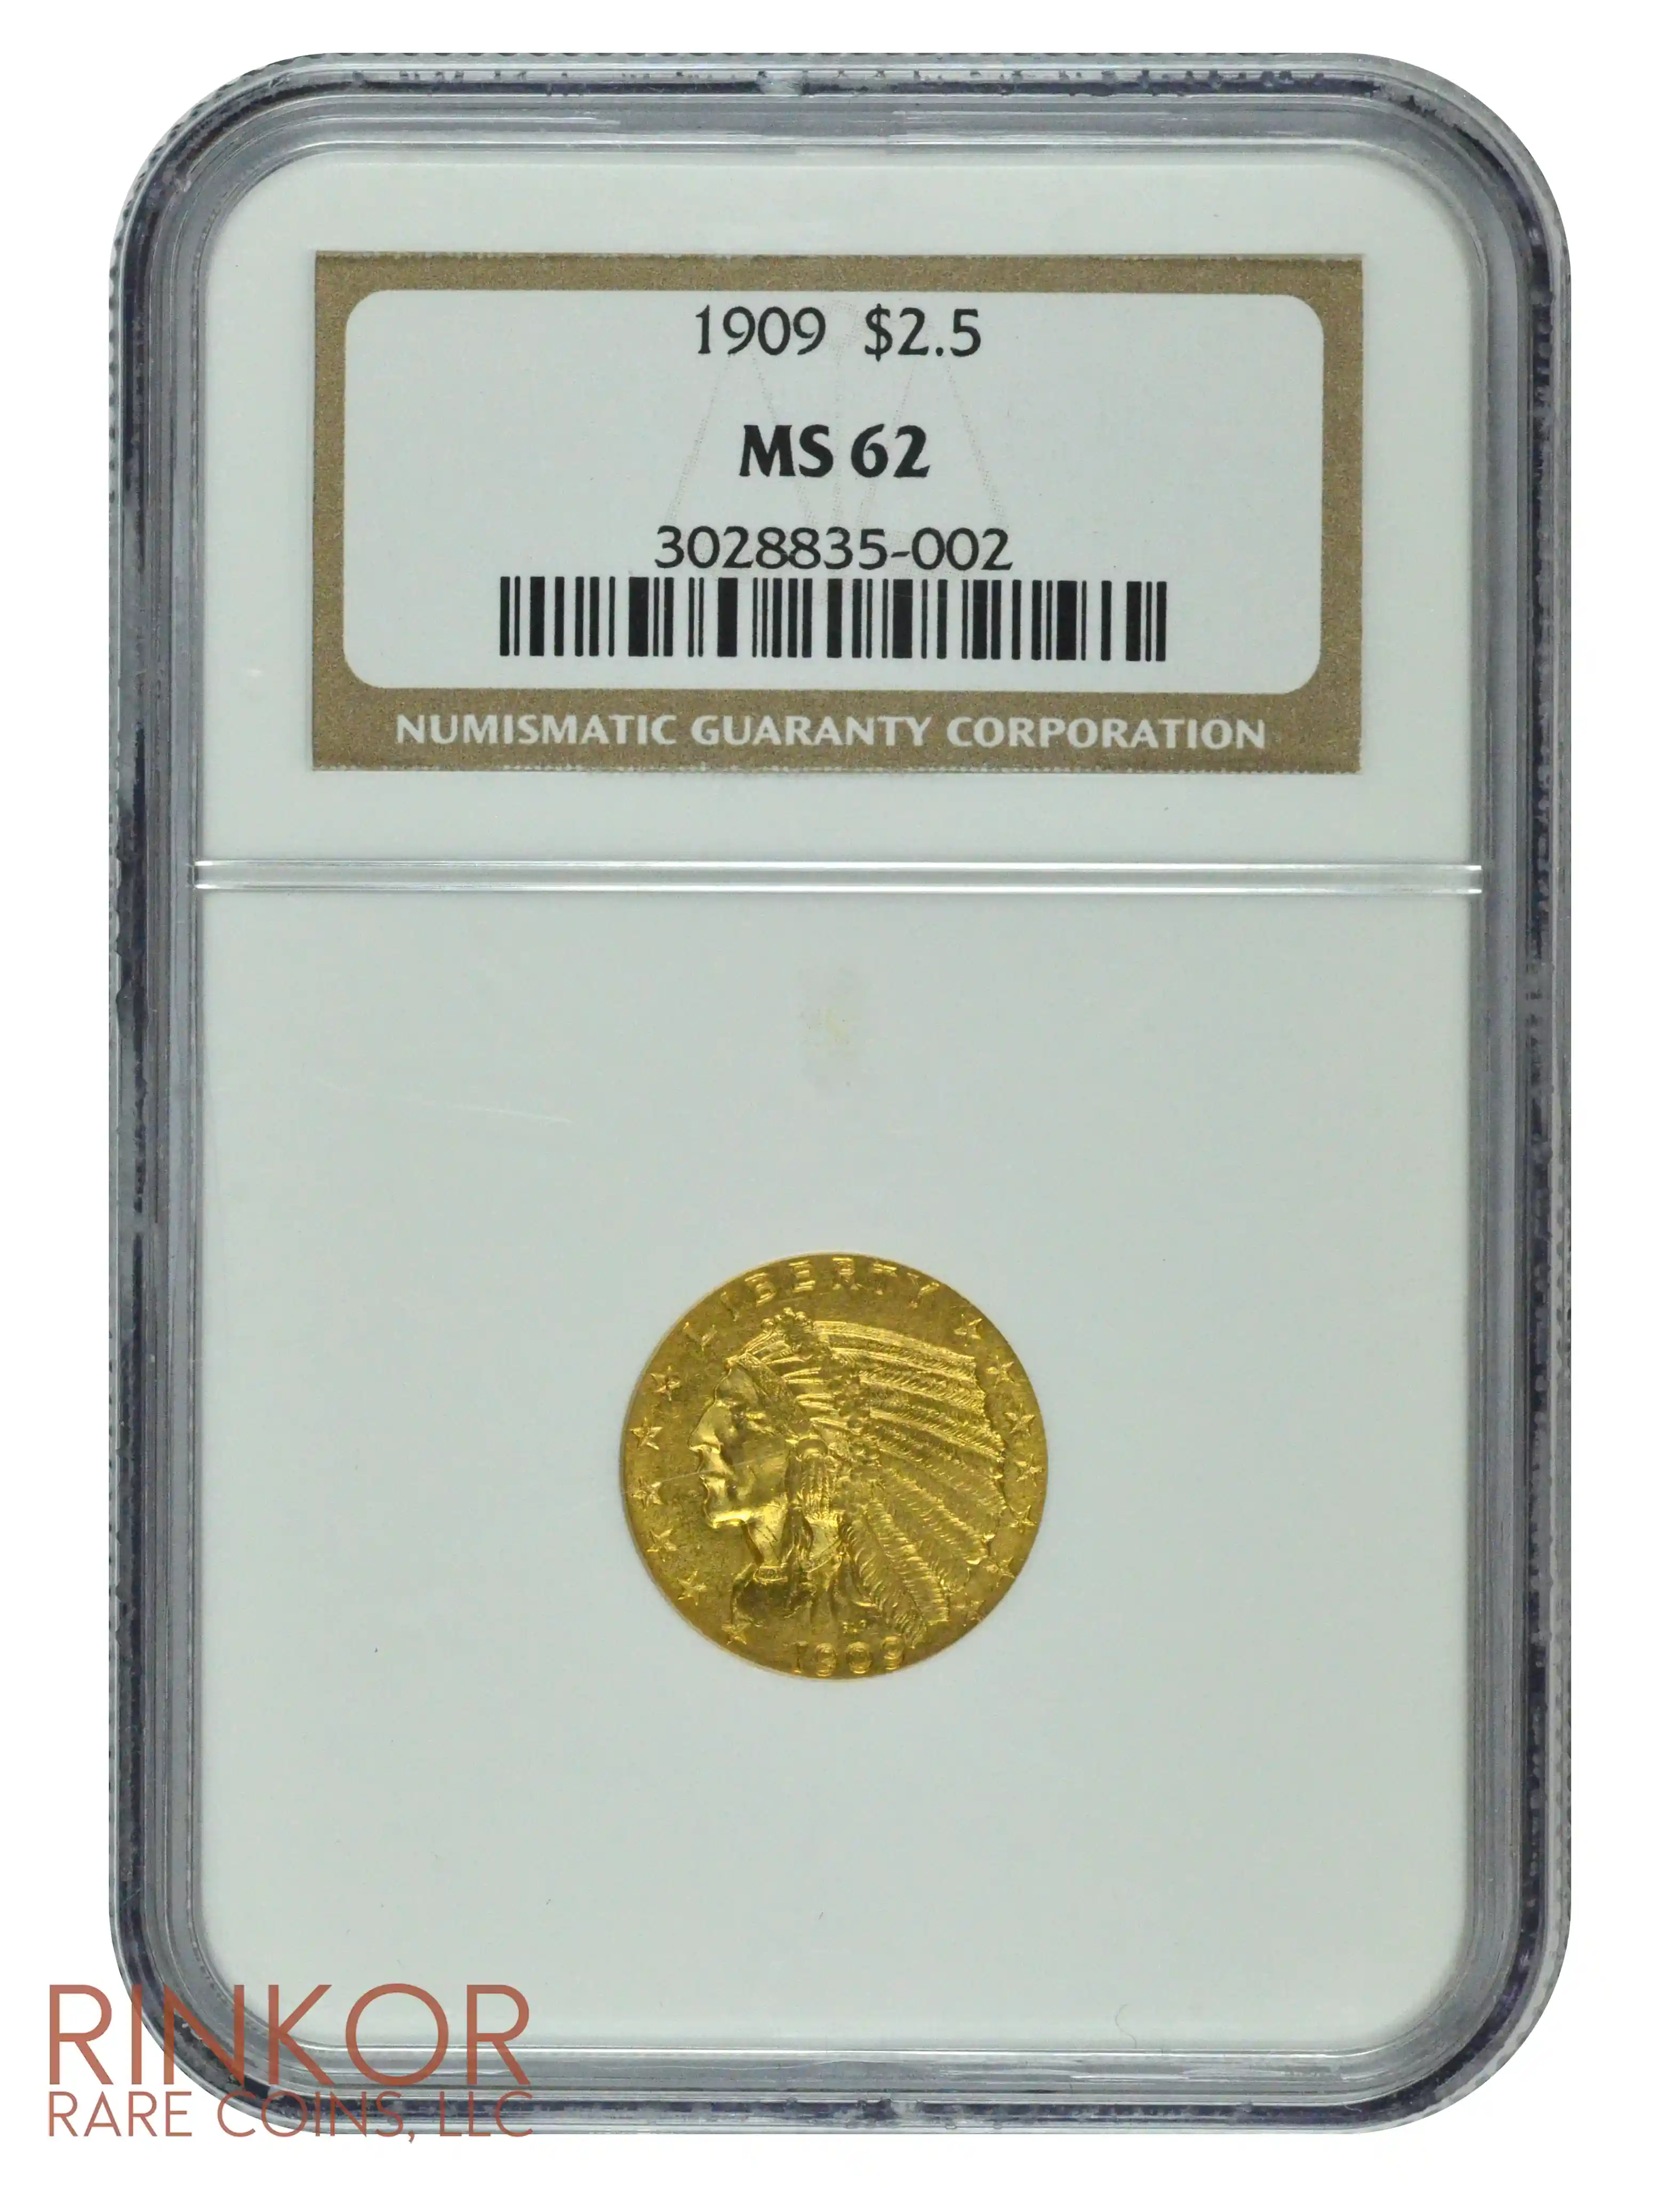 1909 $2.50 Indian Head NGC MS 62 